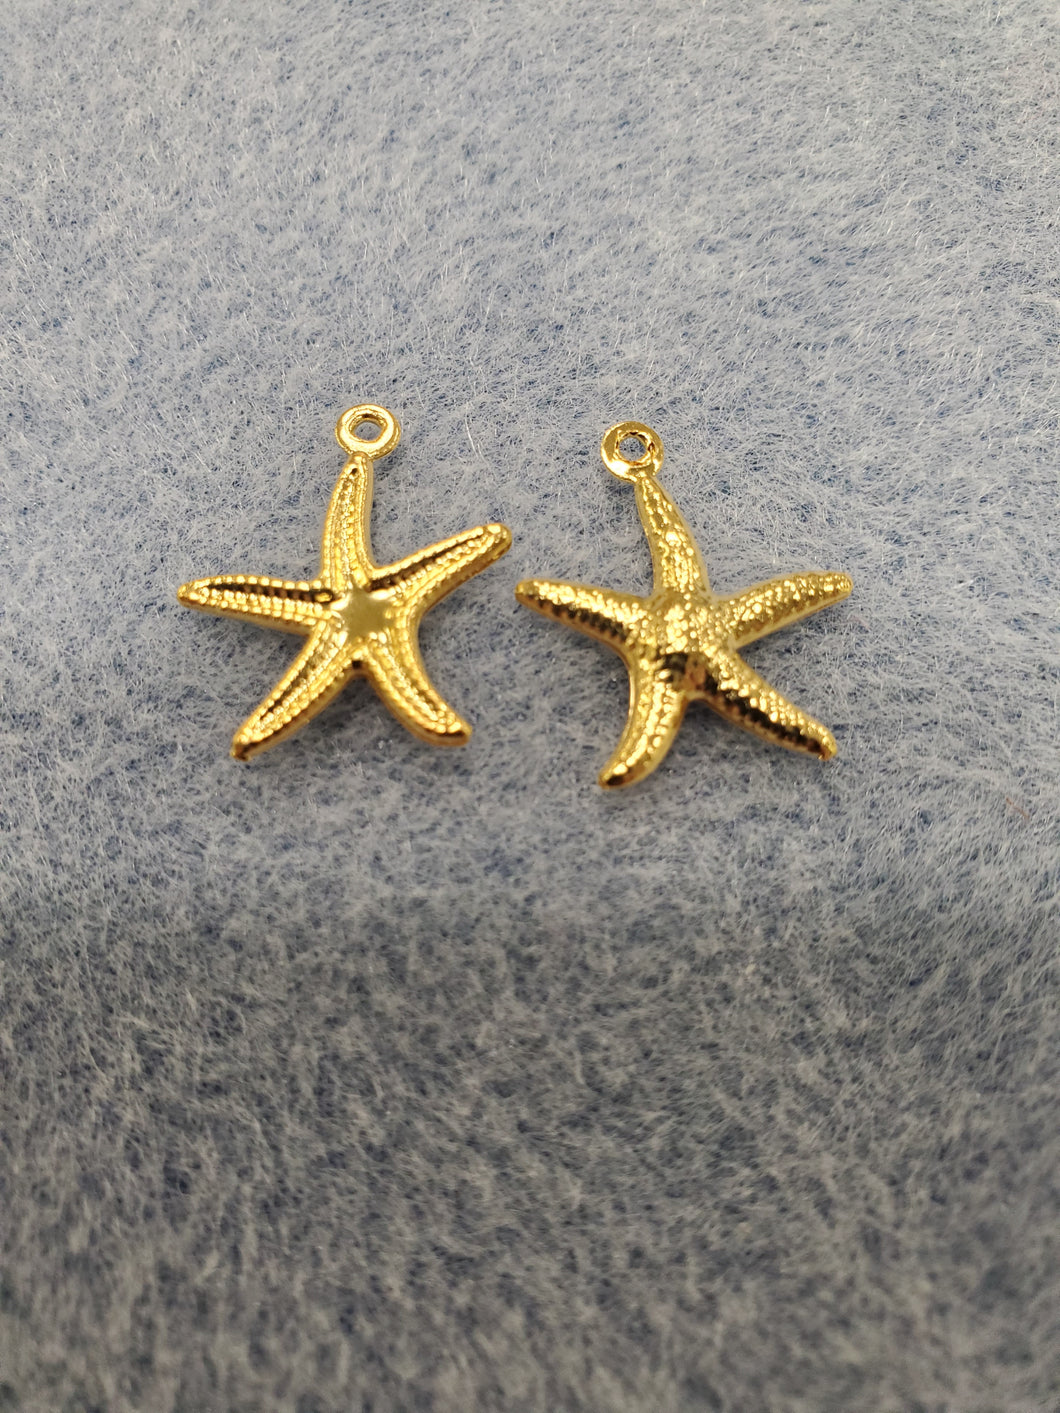 304 Stainless Steel Golden Starfish Charm